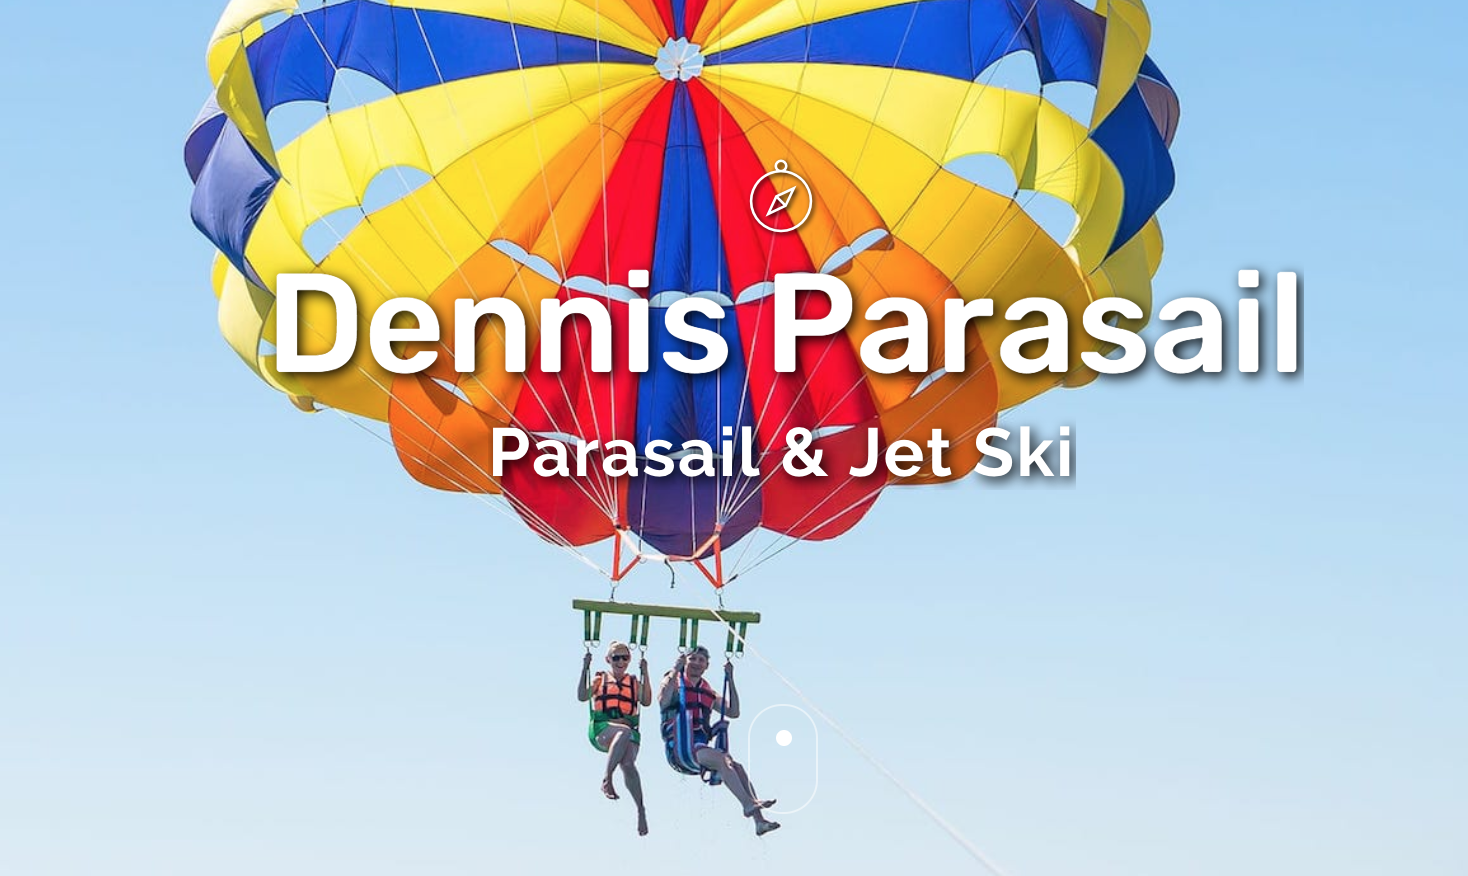 Image - Dennis Parasail and Jet Ski